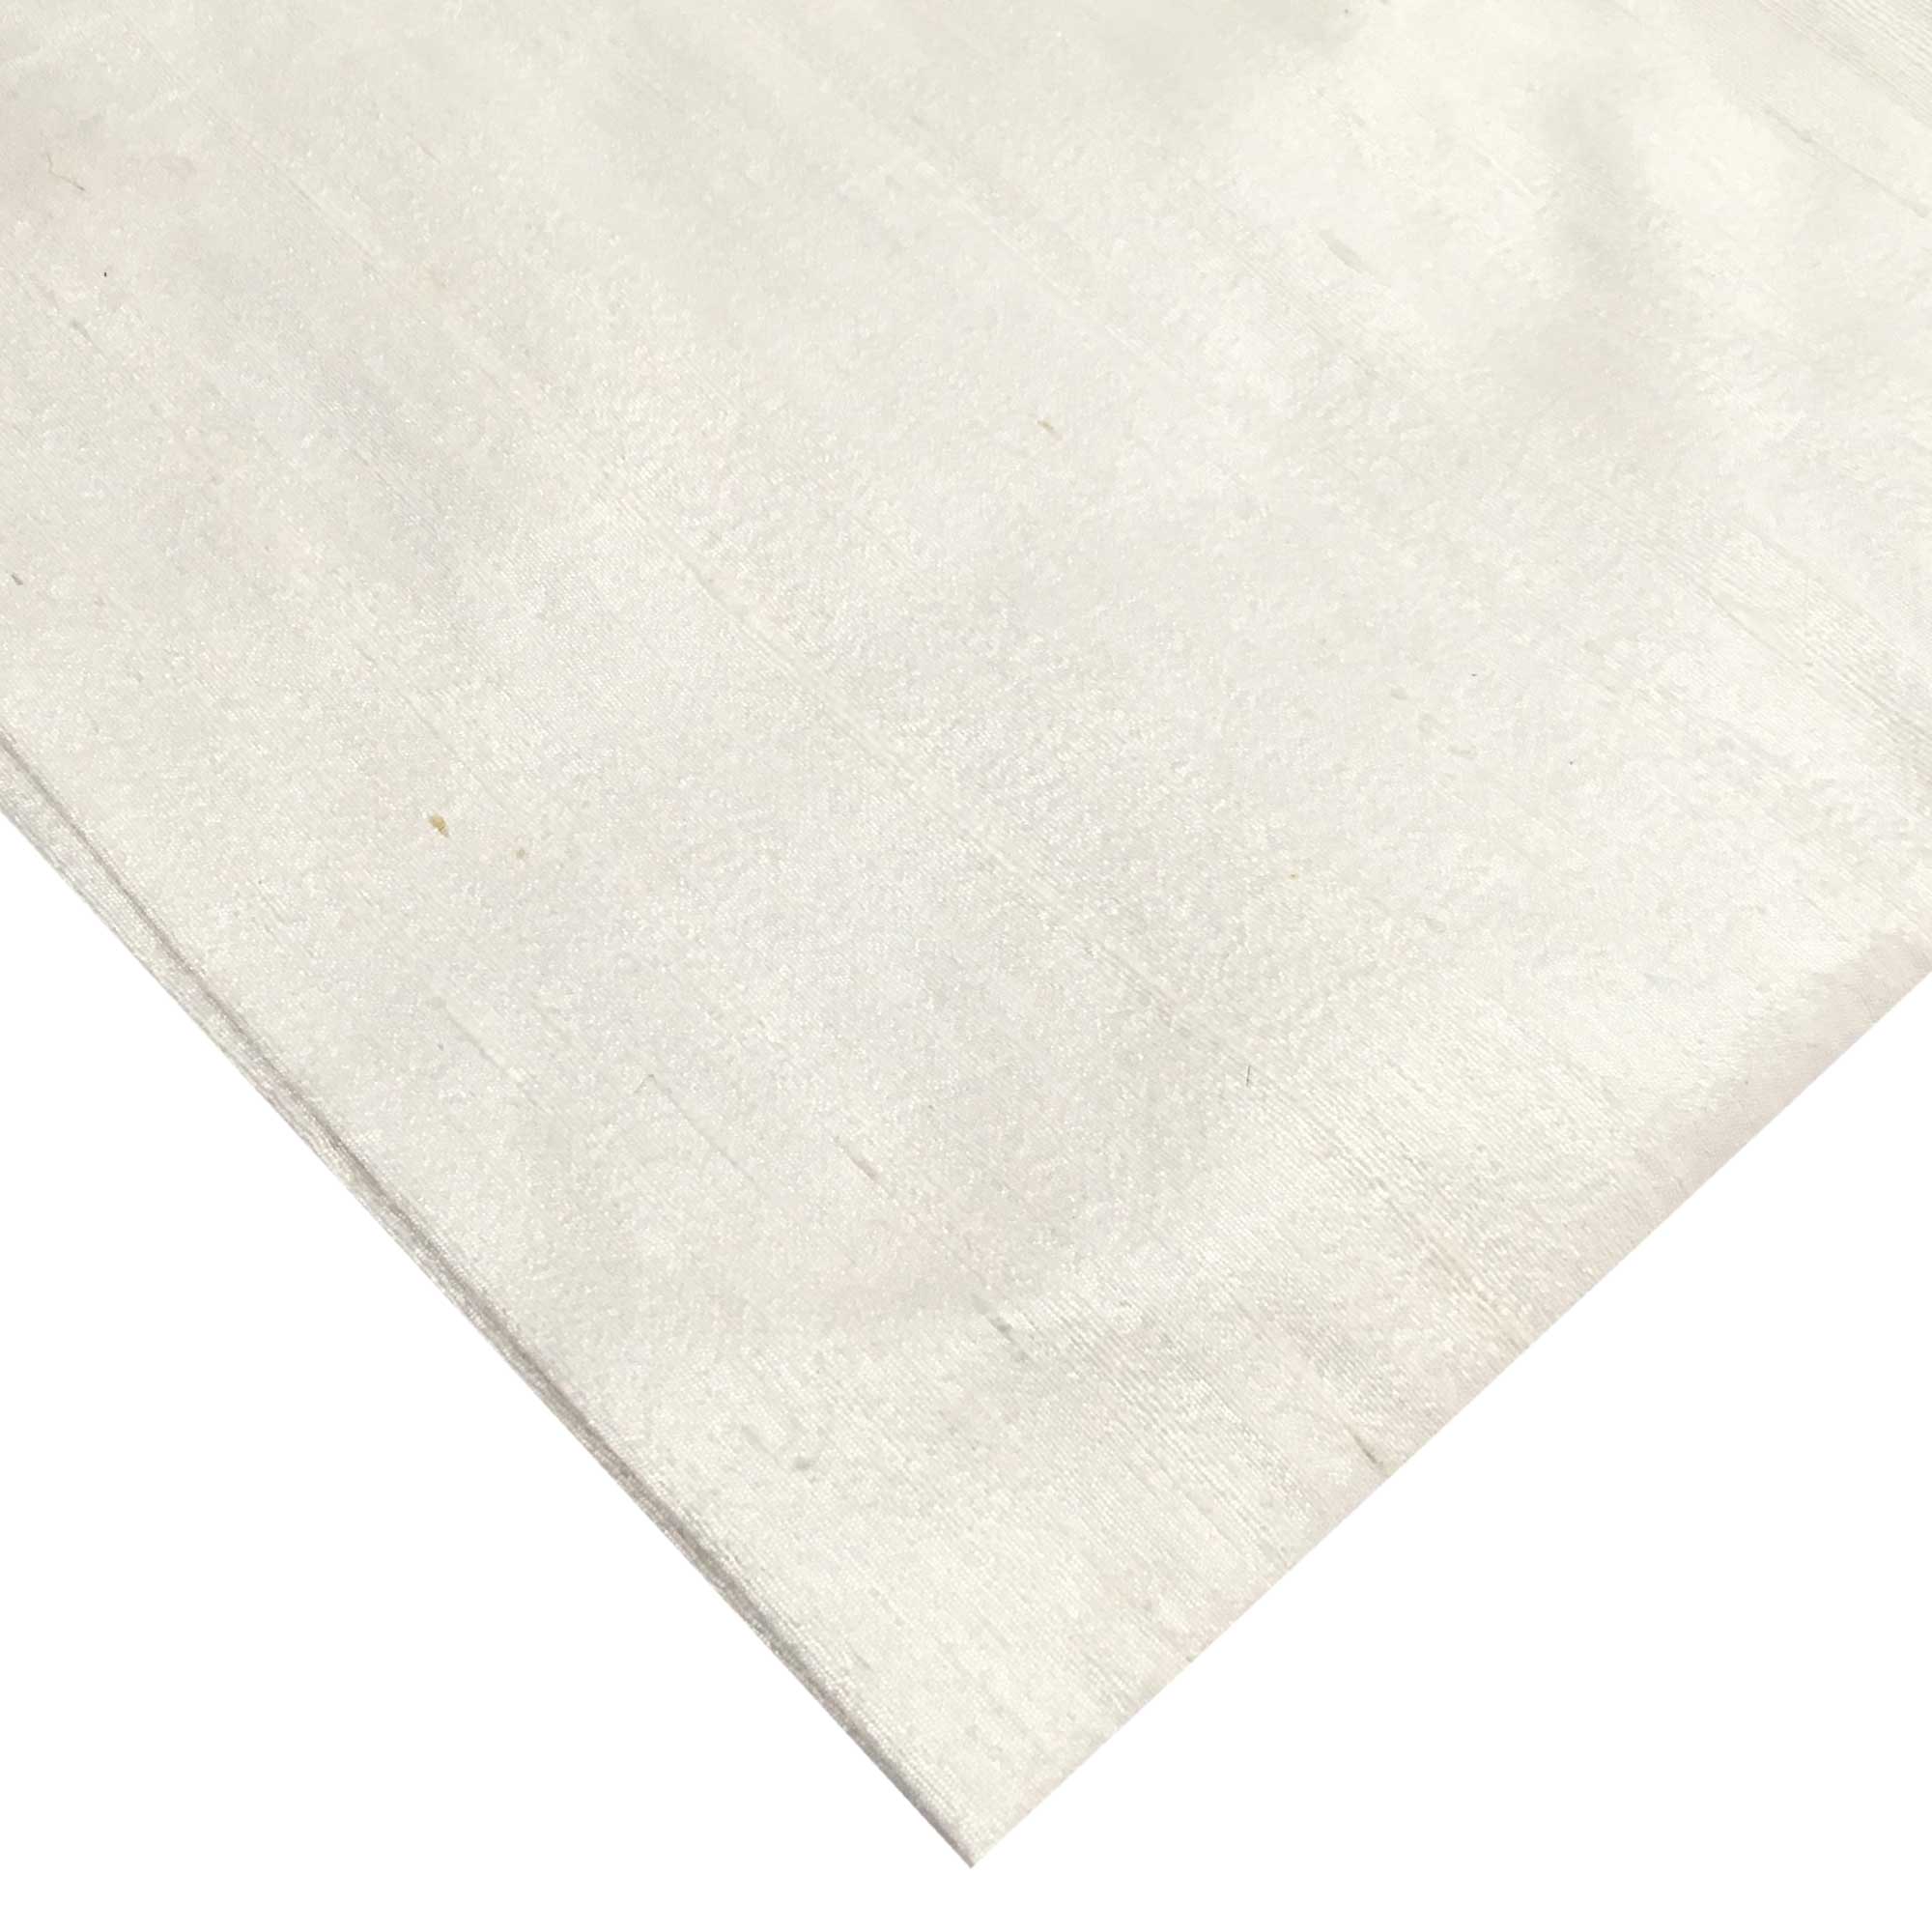 White Ivory pure silk fabric